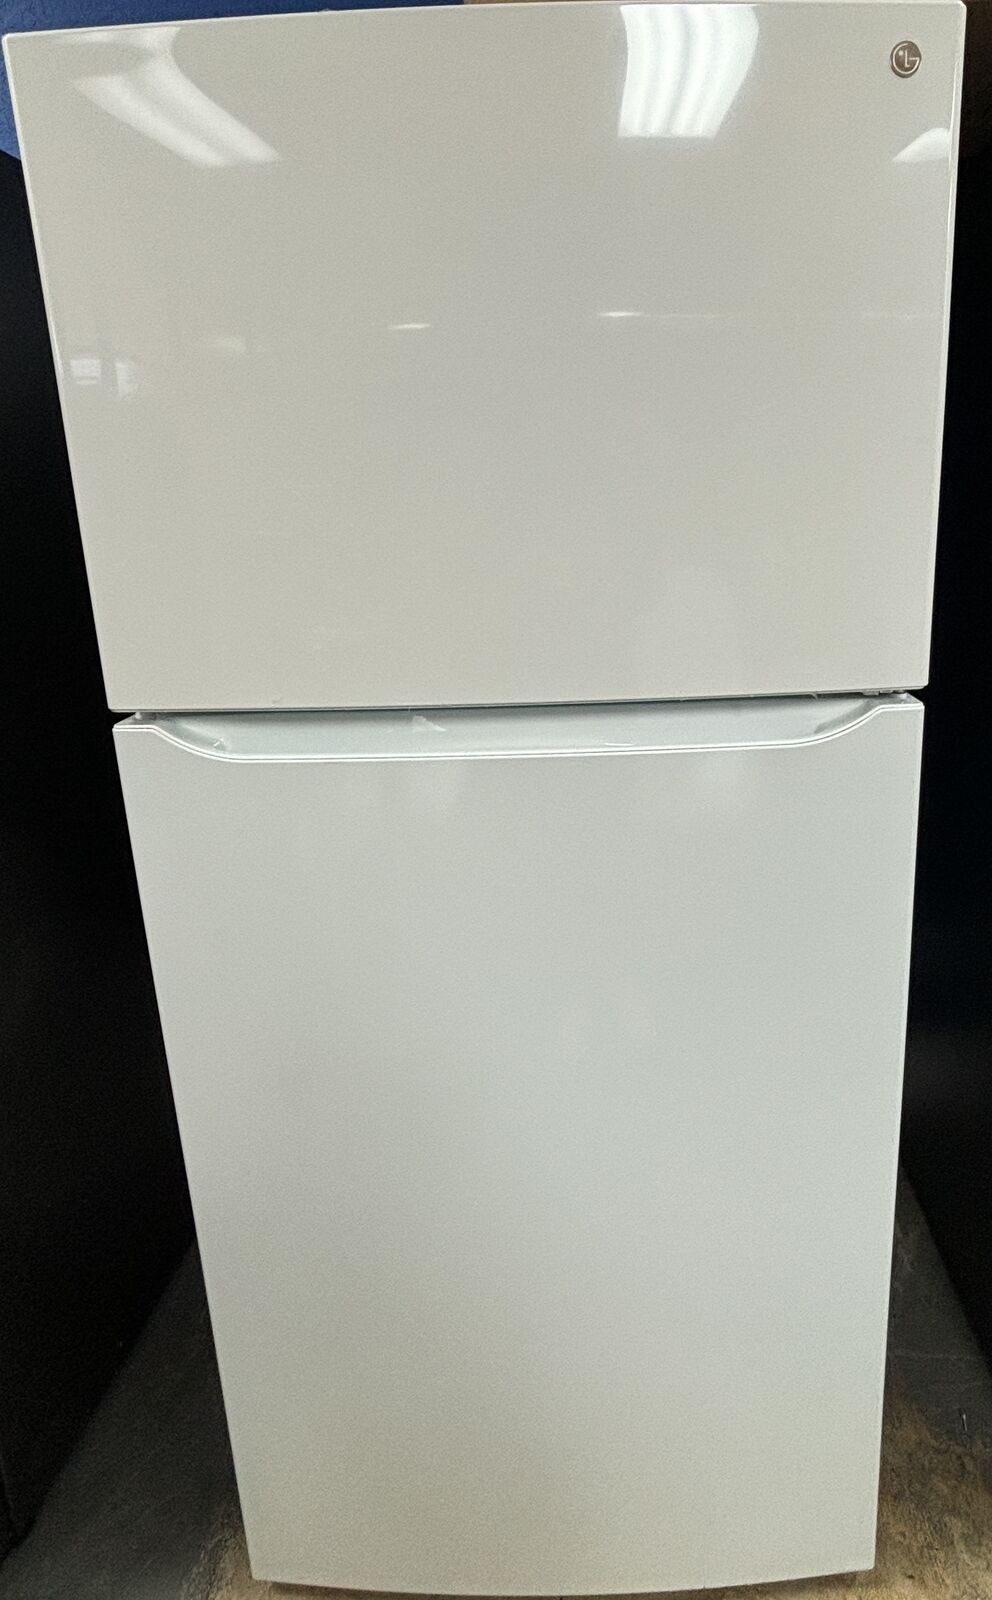 Lg Electronics - Top-Freezer (Refrigerator) - LTCS20020W